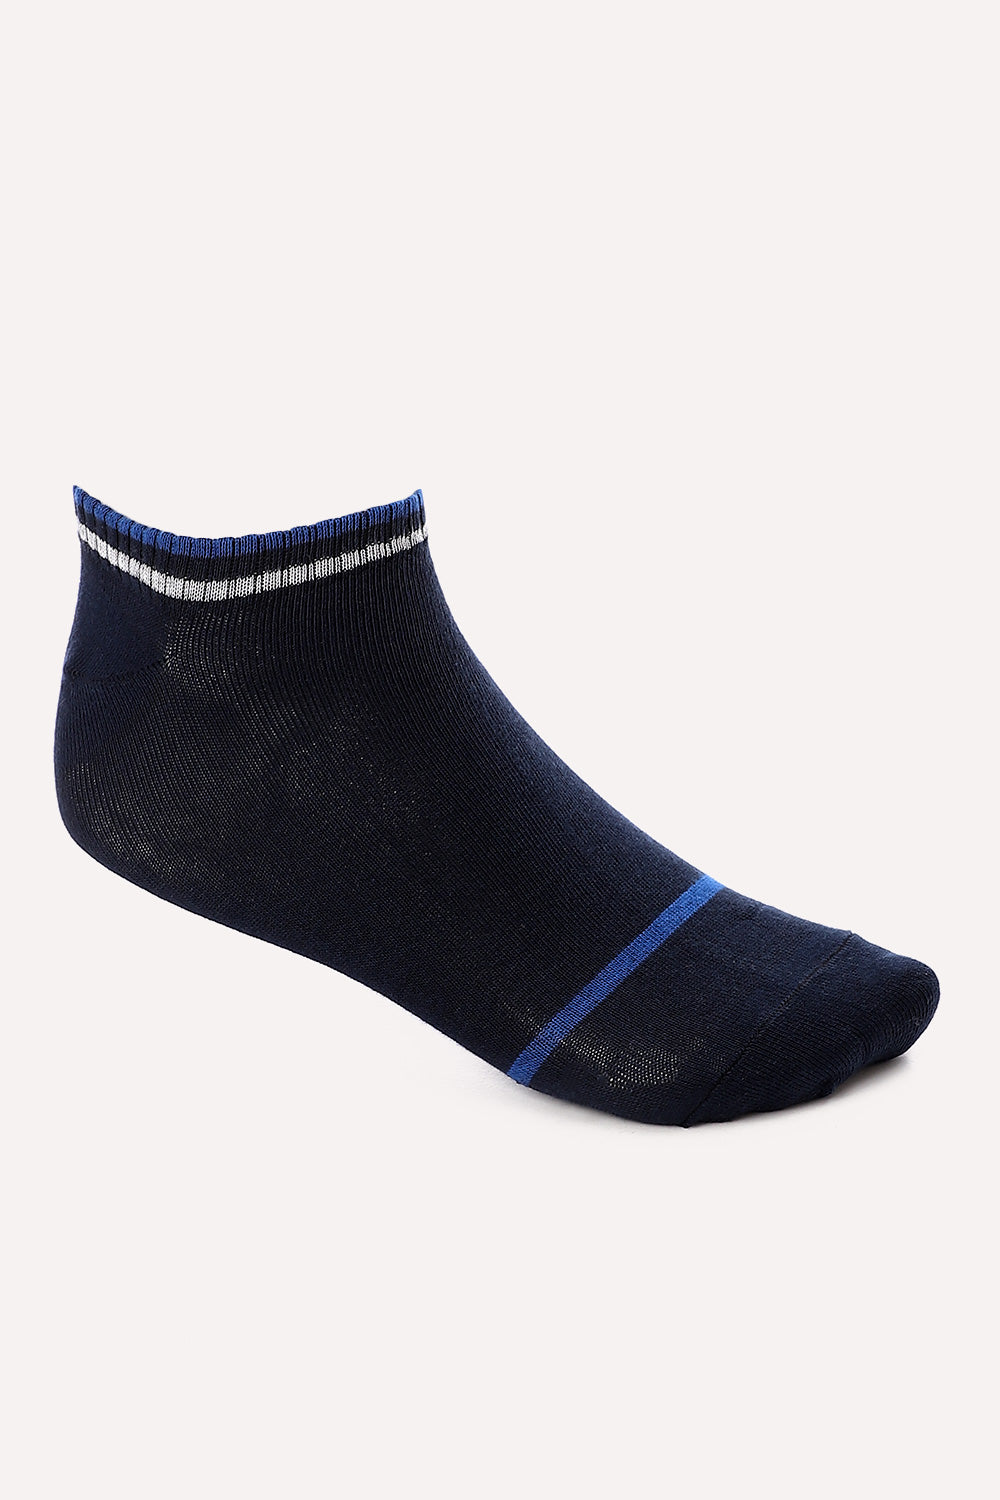 Lined Elastic Trim Ankle Socks